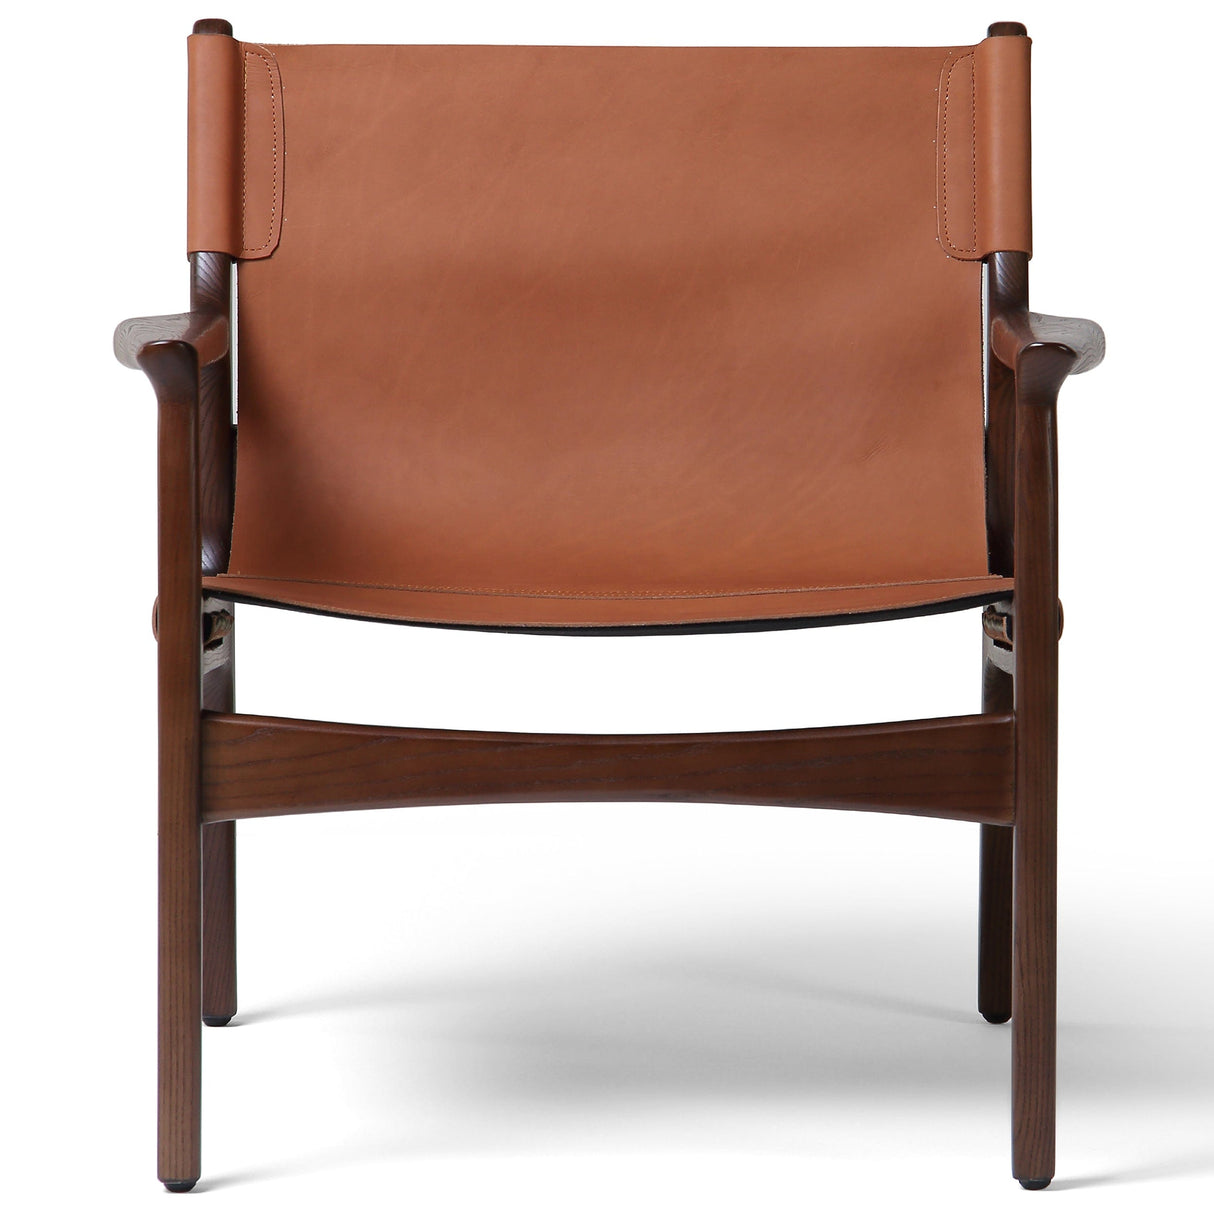 Four Hands Rafi Chair Furniture four-hands-234664-001 801542066246